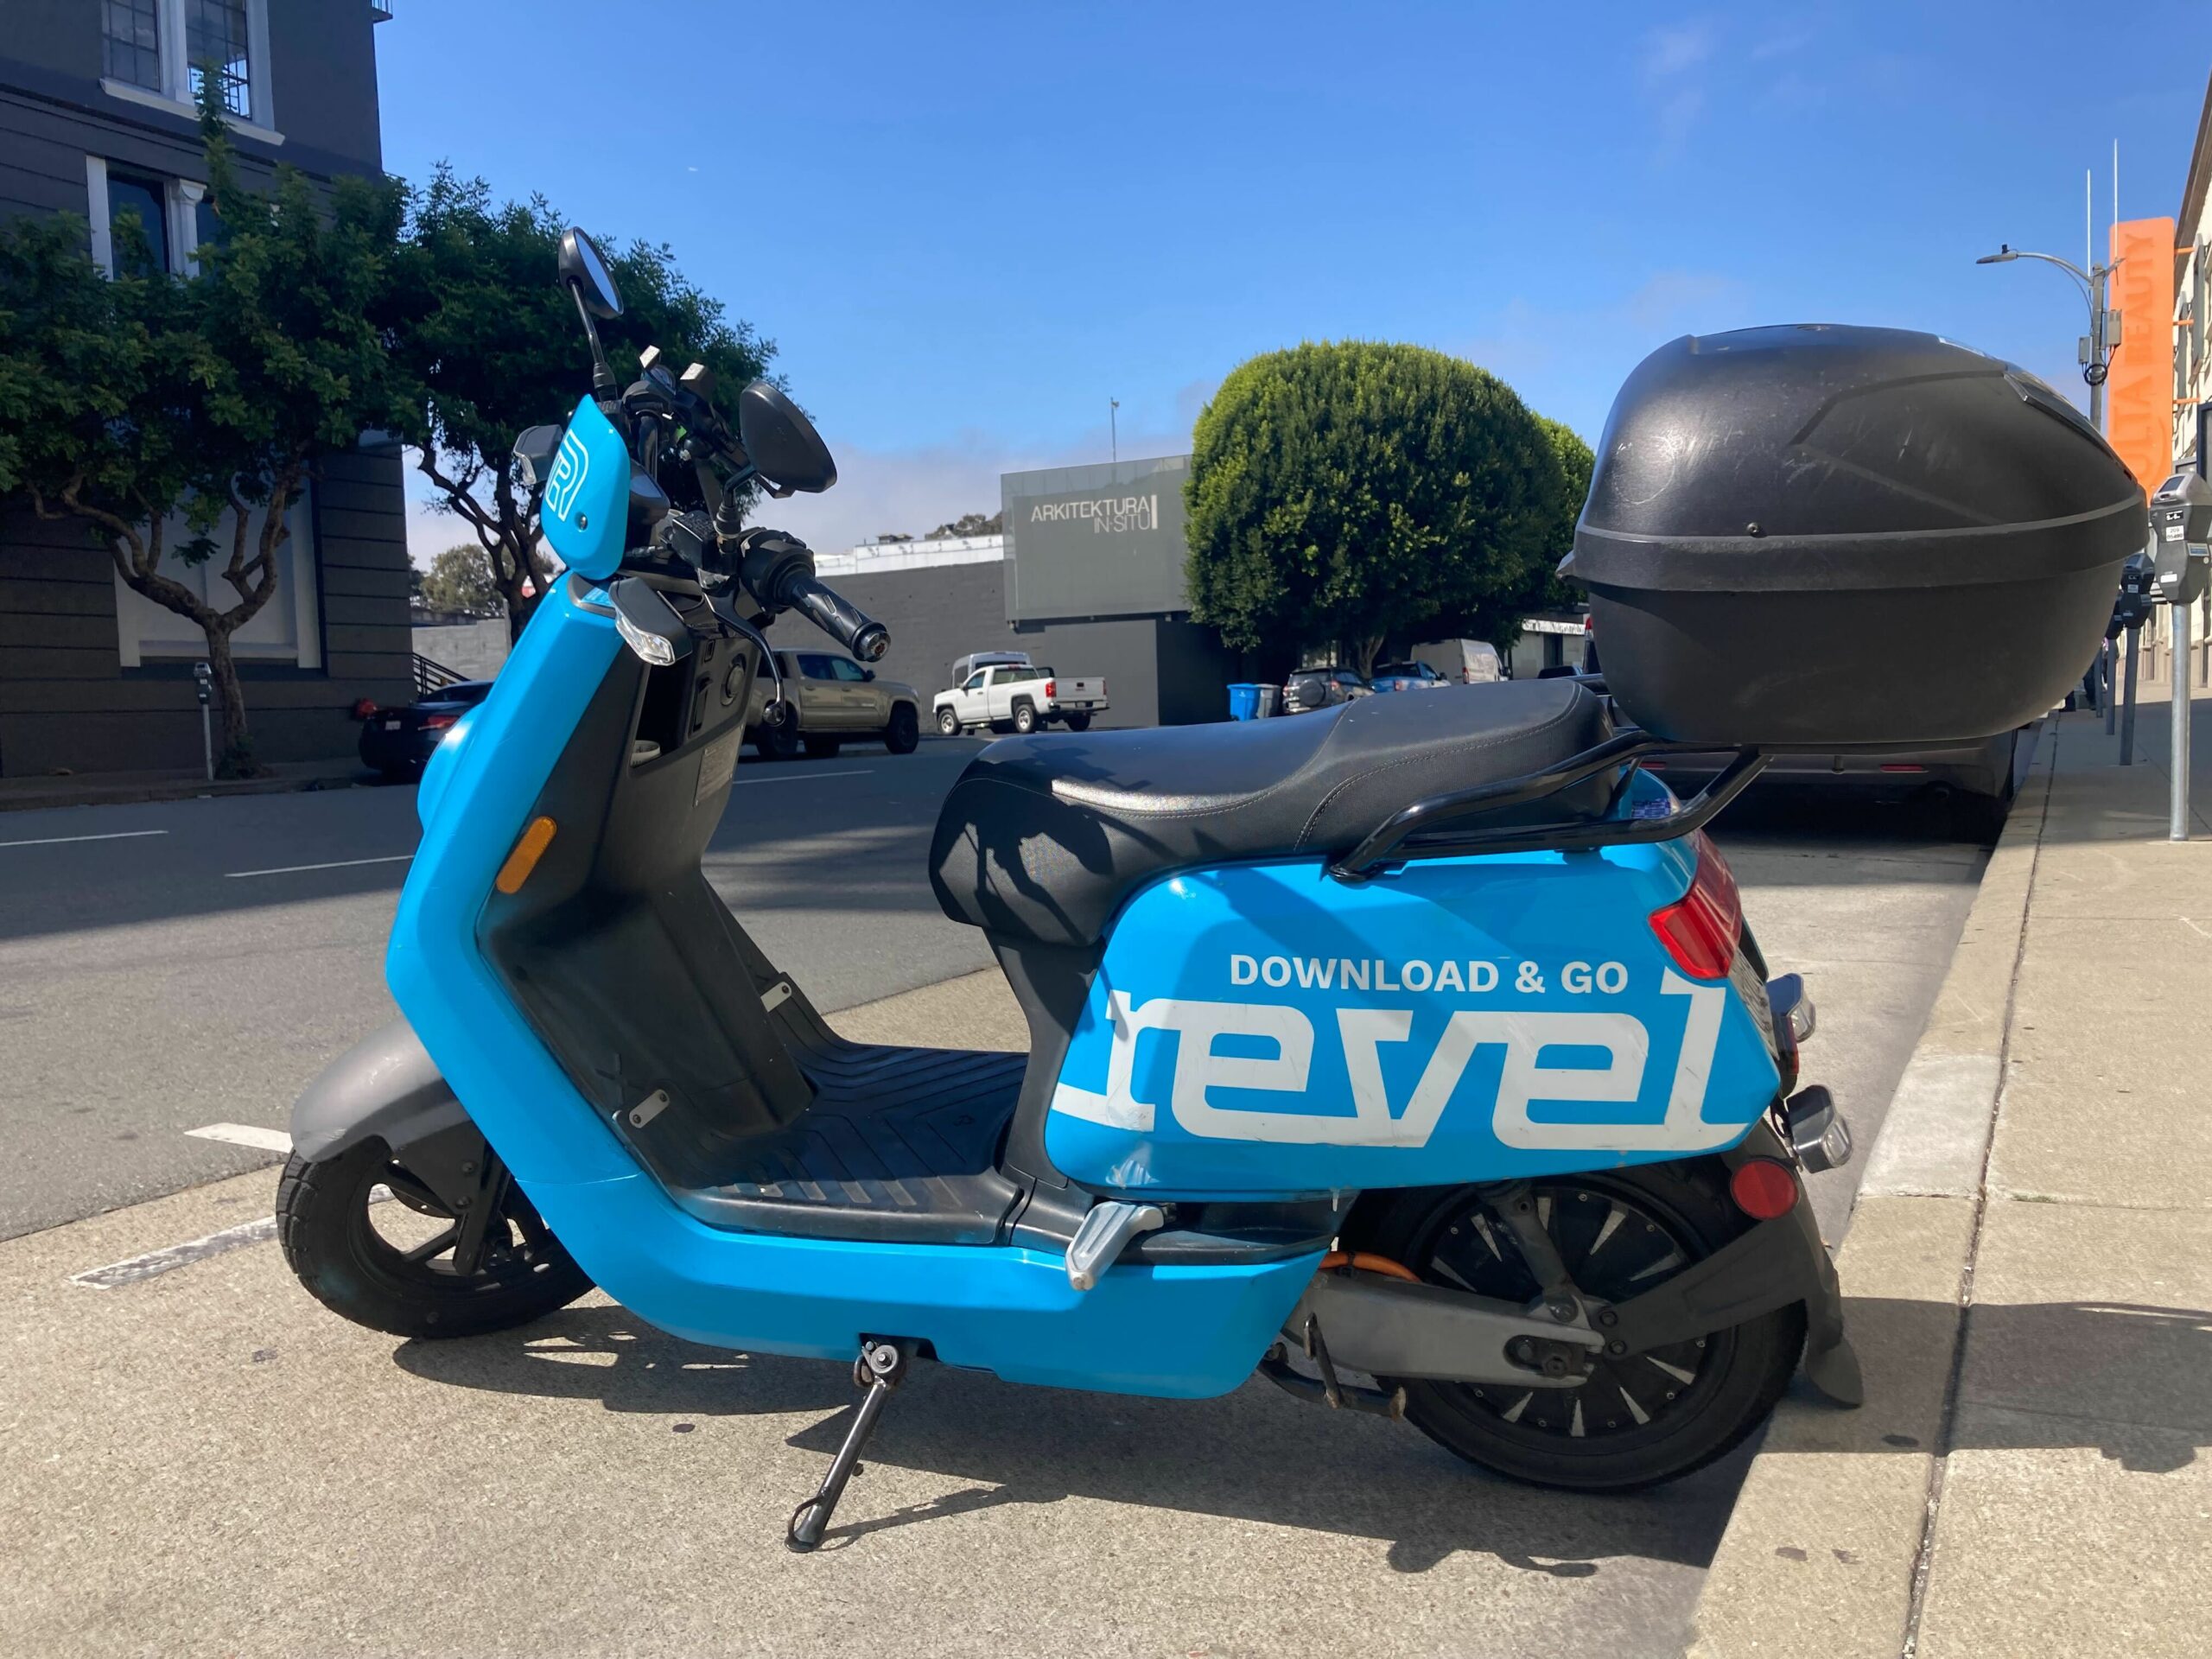 Revel mopeds: A fad or the future of urban transportation?